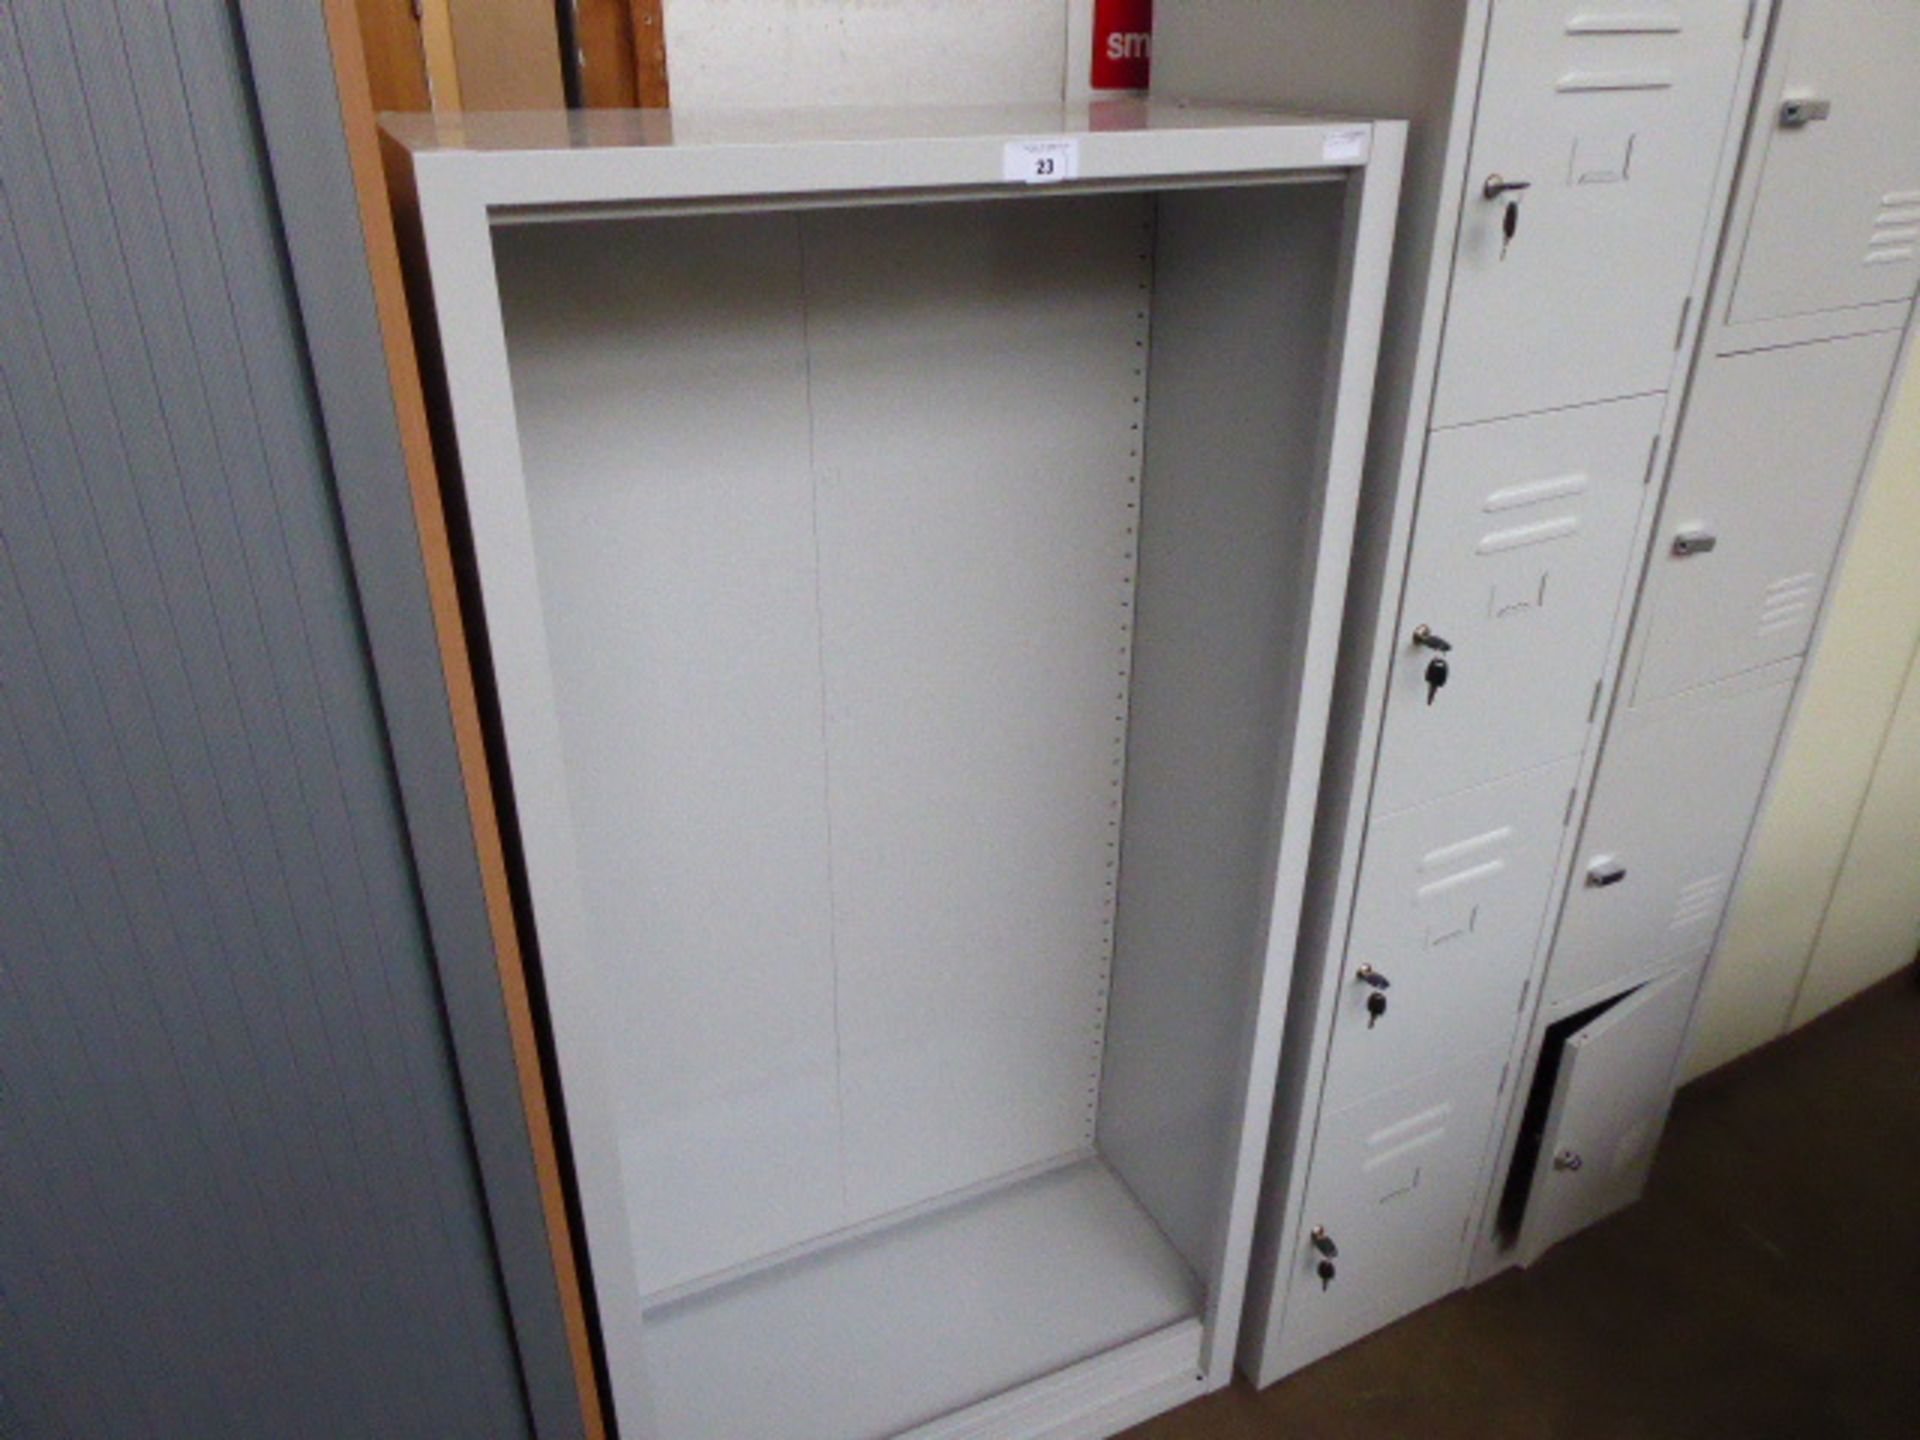 Grey metal open shelf unit with 4 shelves